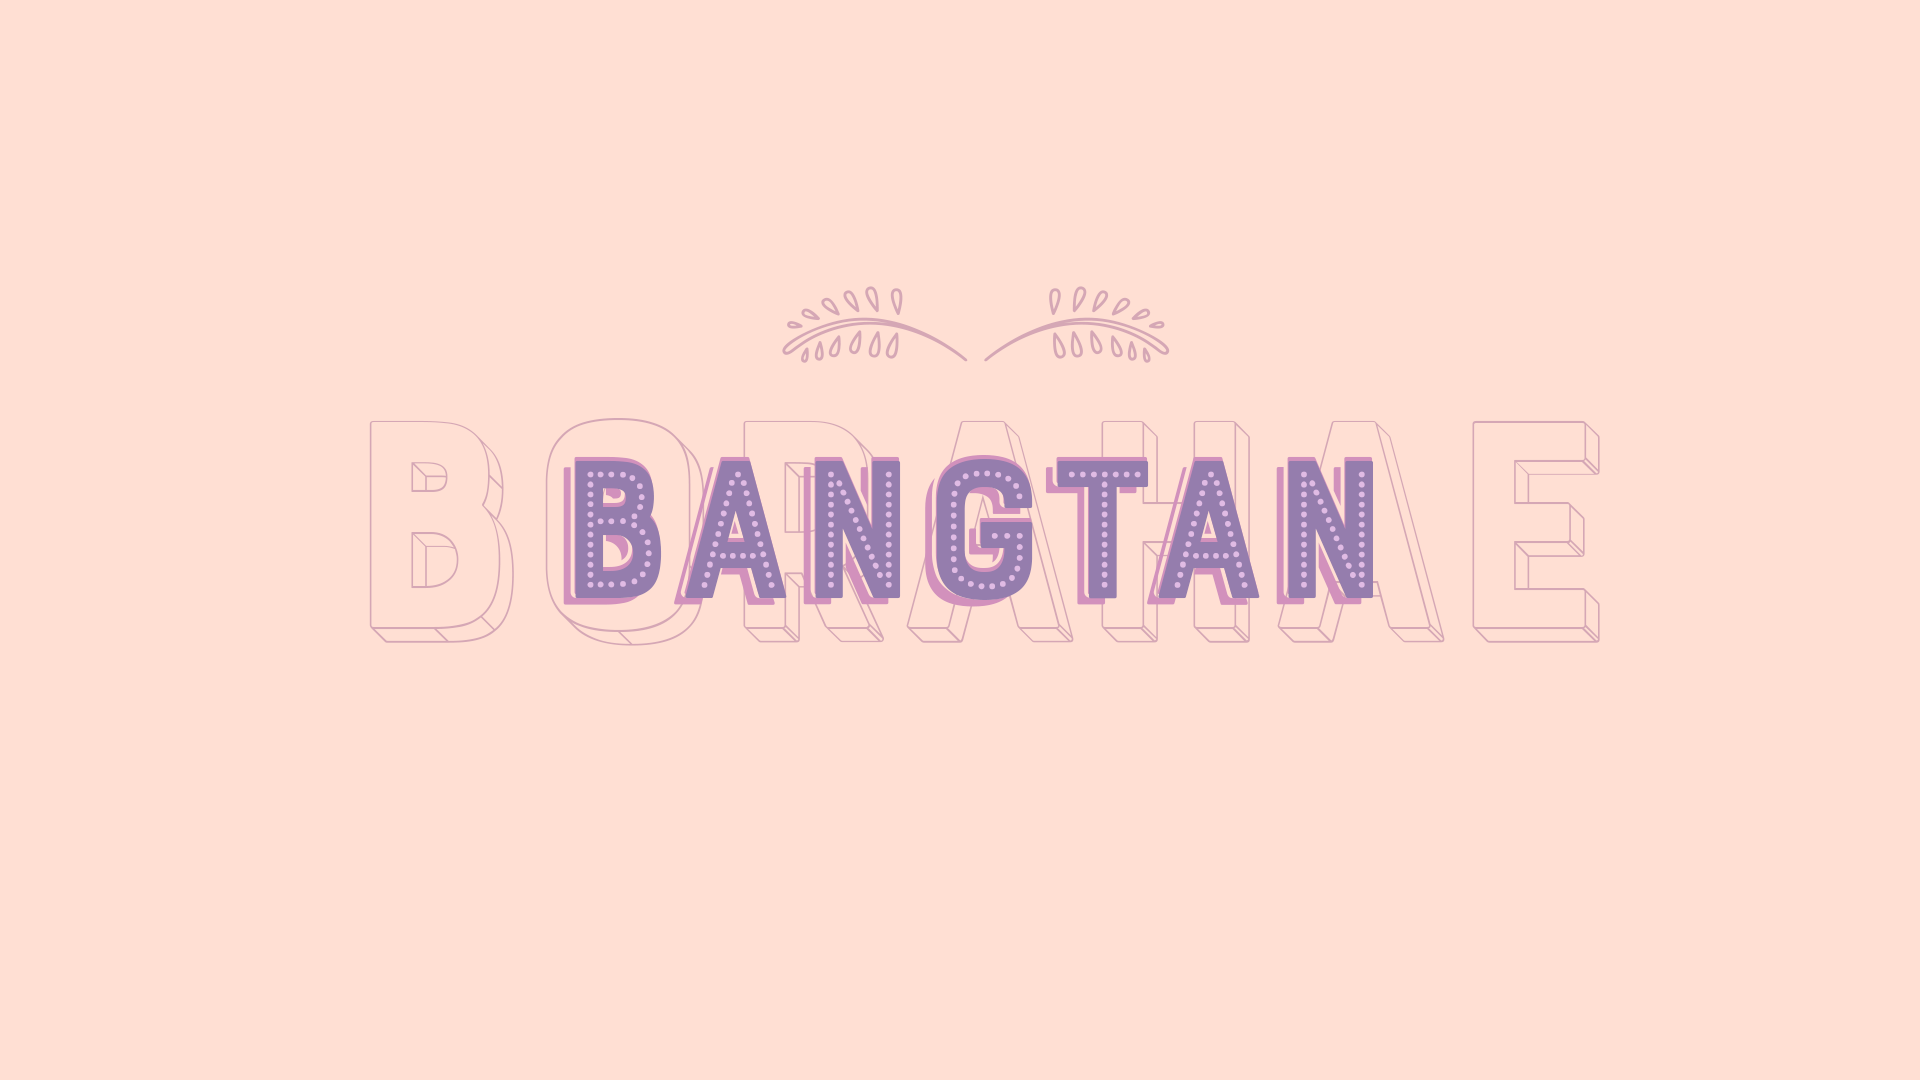 BTS bangtan HD wallpaper. Bts wallpaper desktop, Bts laptop wallpaper, Bts wallpaper lyrics